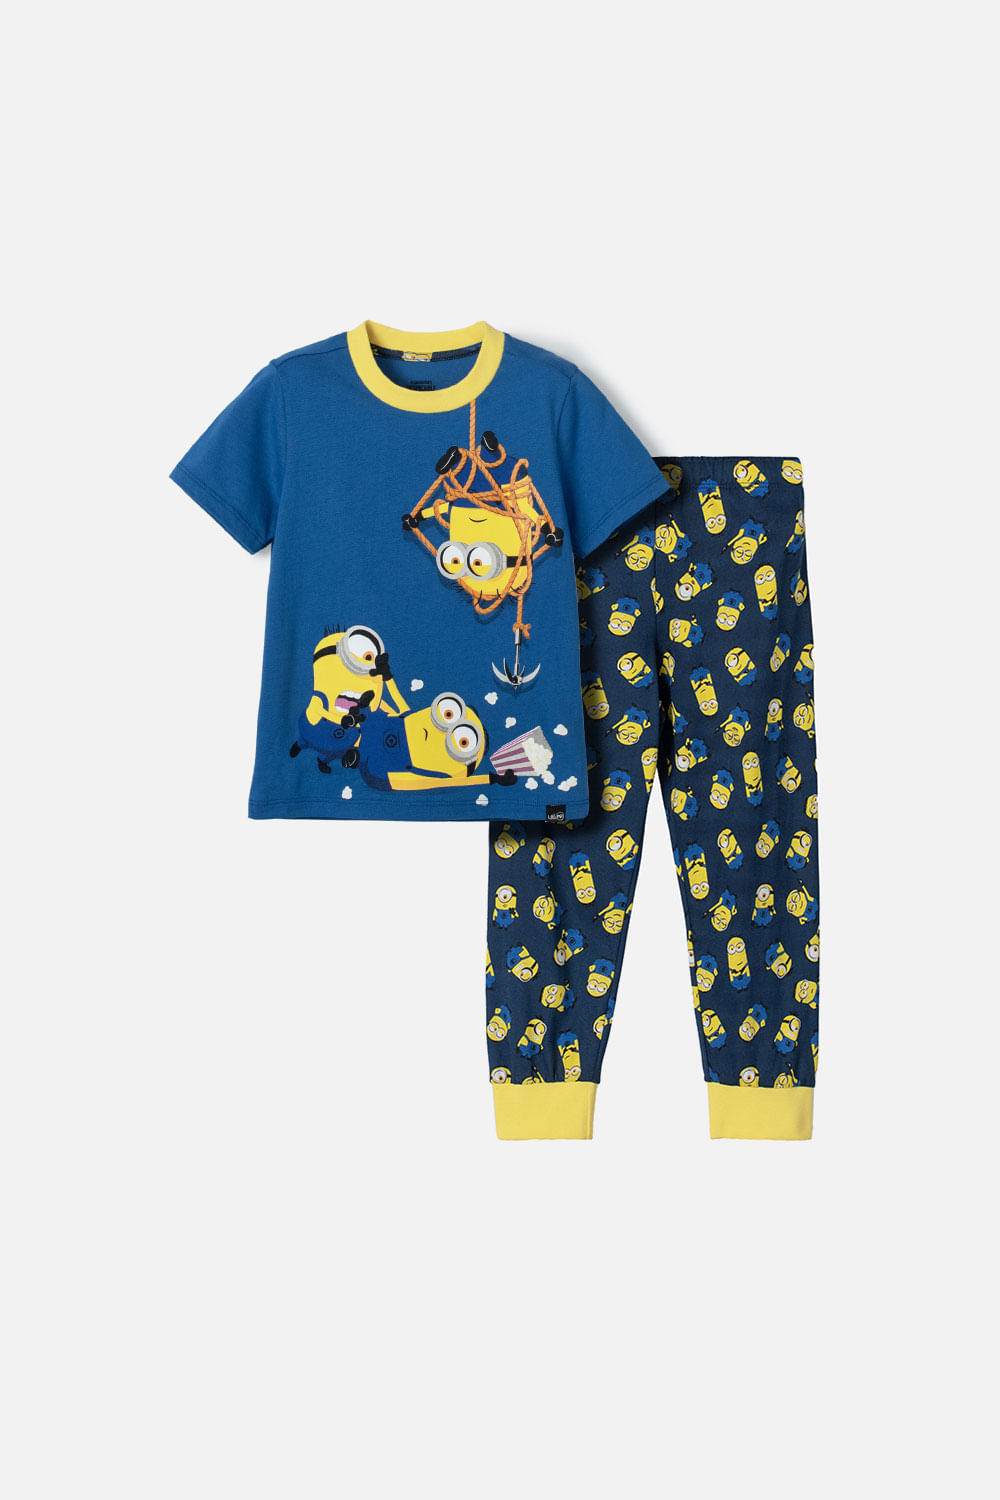 Pijama de Minions azul de camiseta manga corta para niño 2T a 5T 2T-0